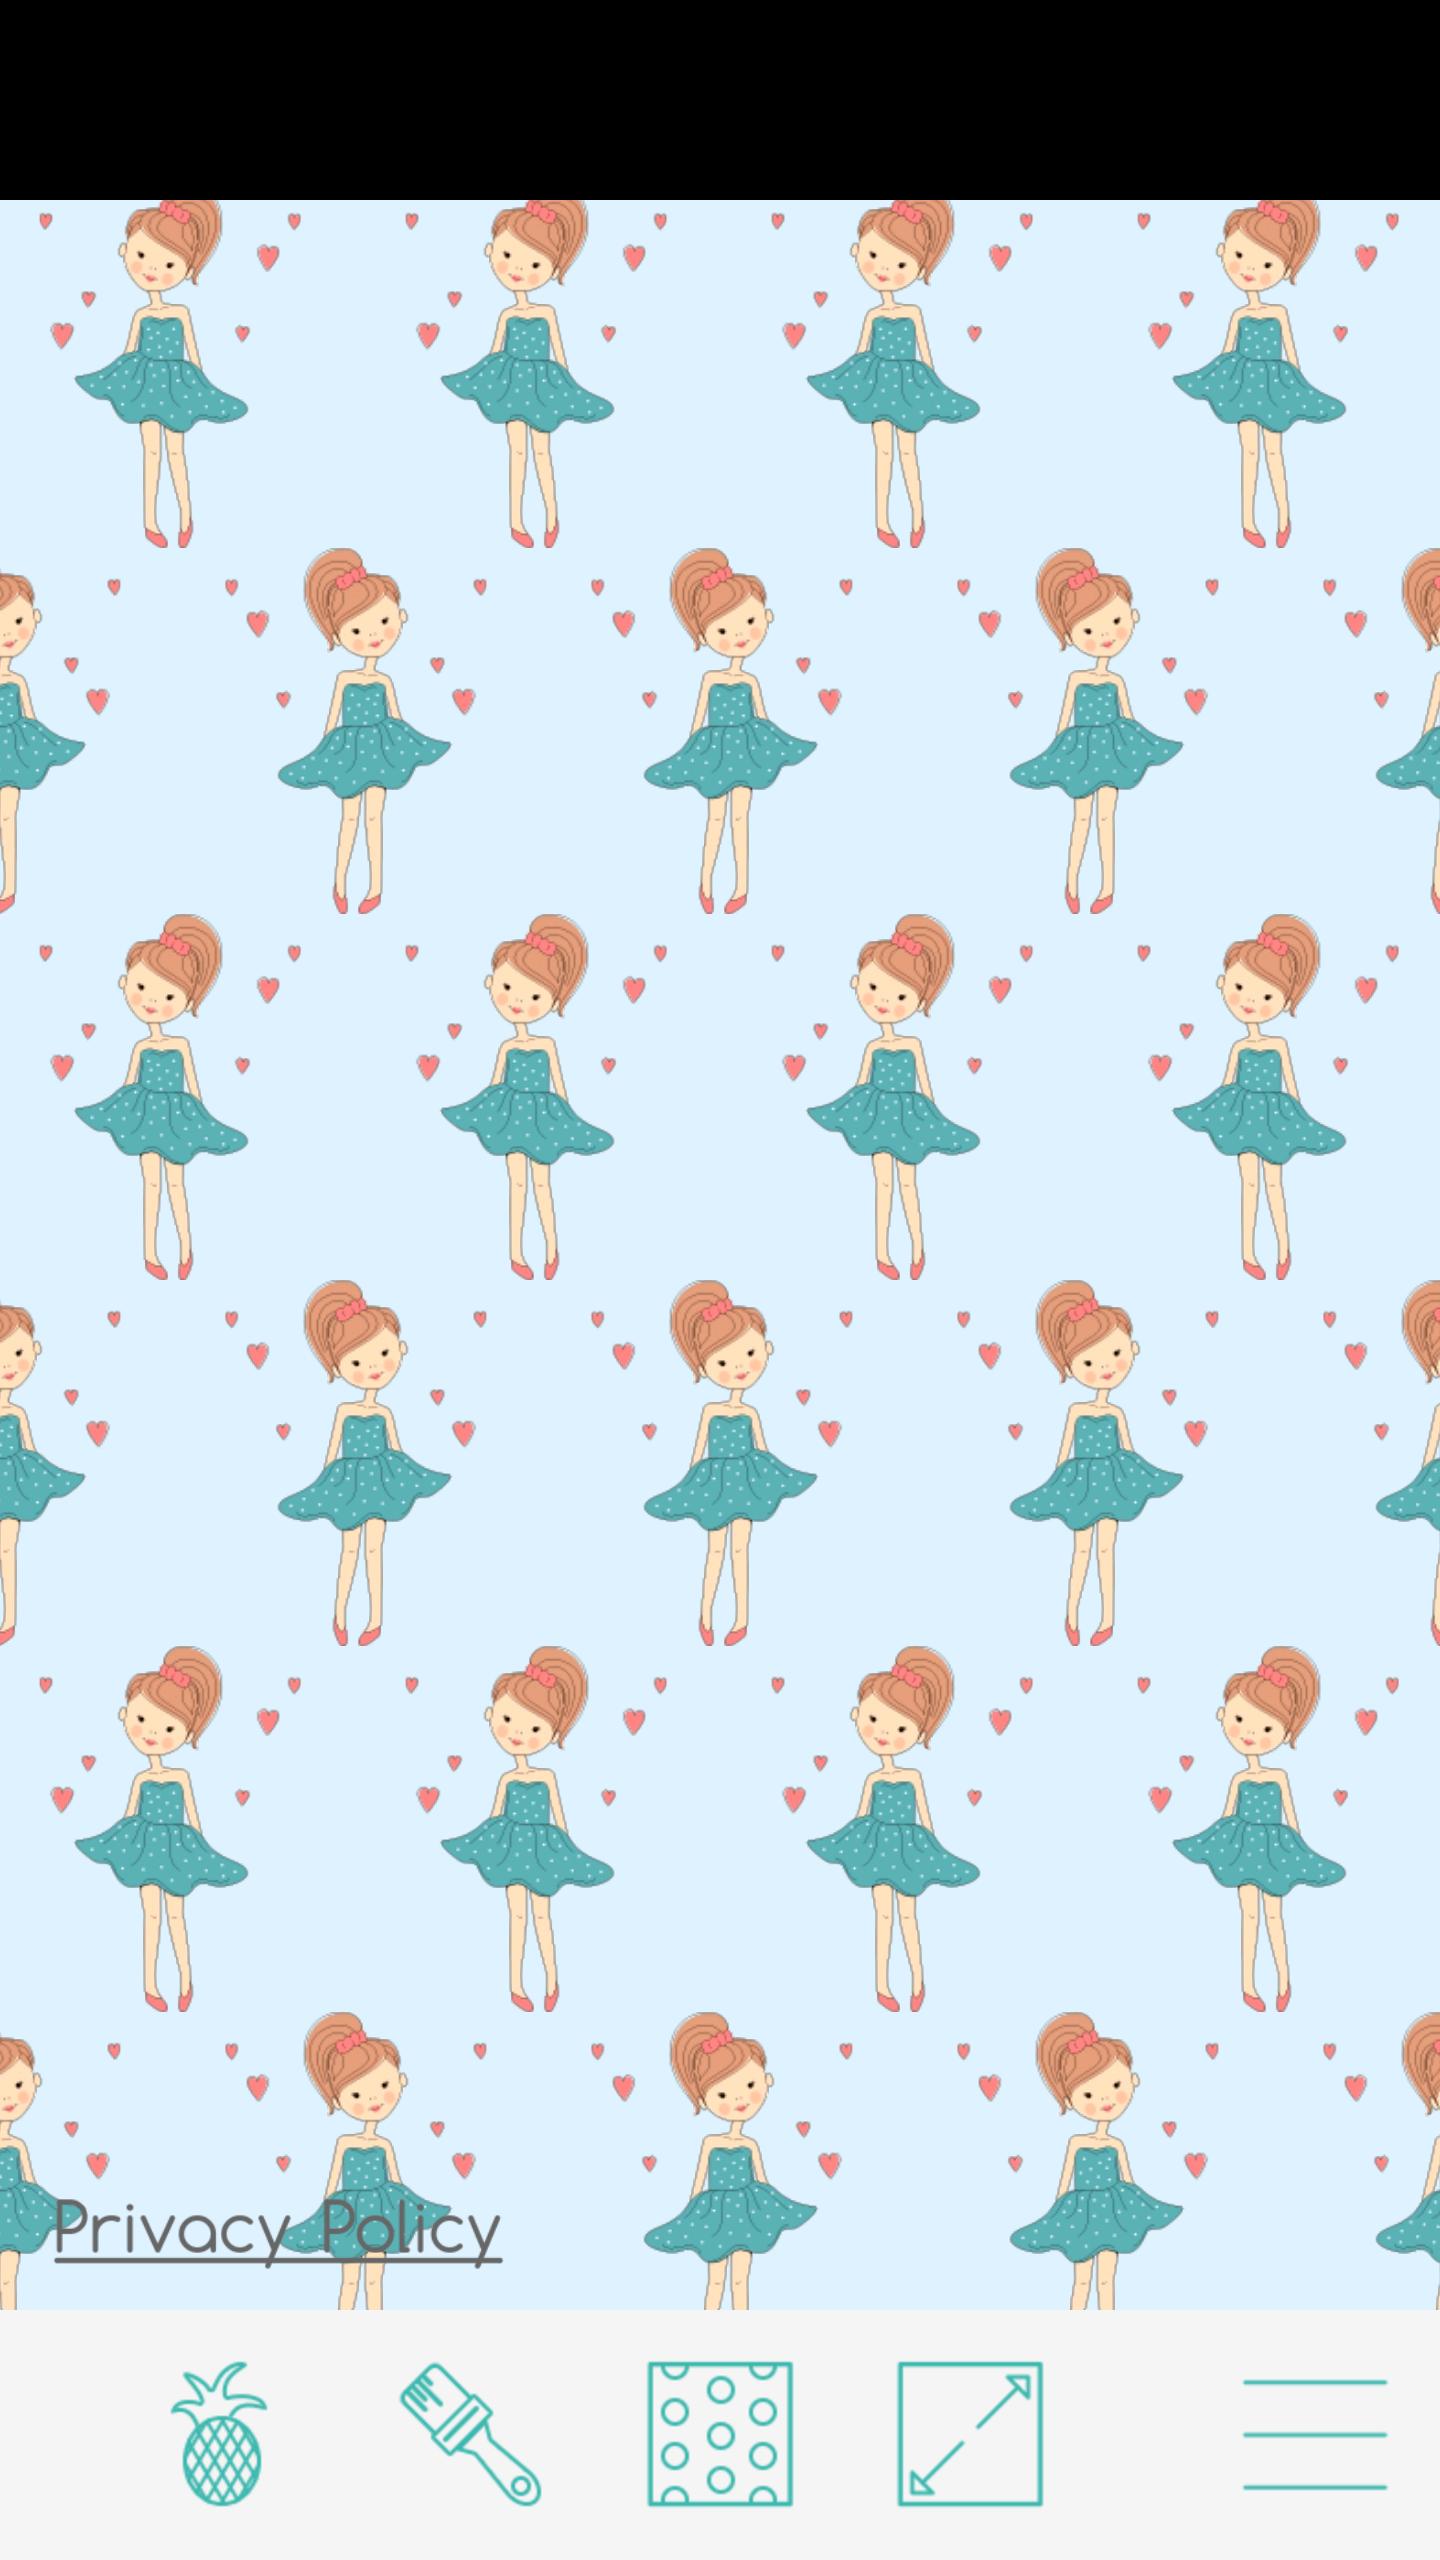 Wallpaper Lucu Cute Wallpaper For Android APK Download